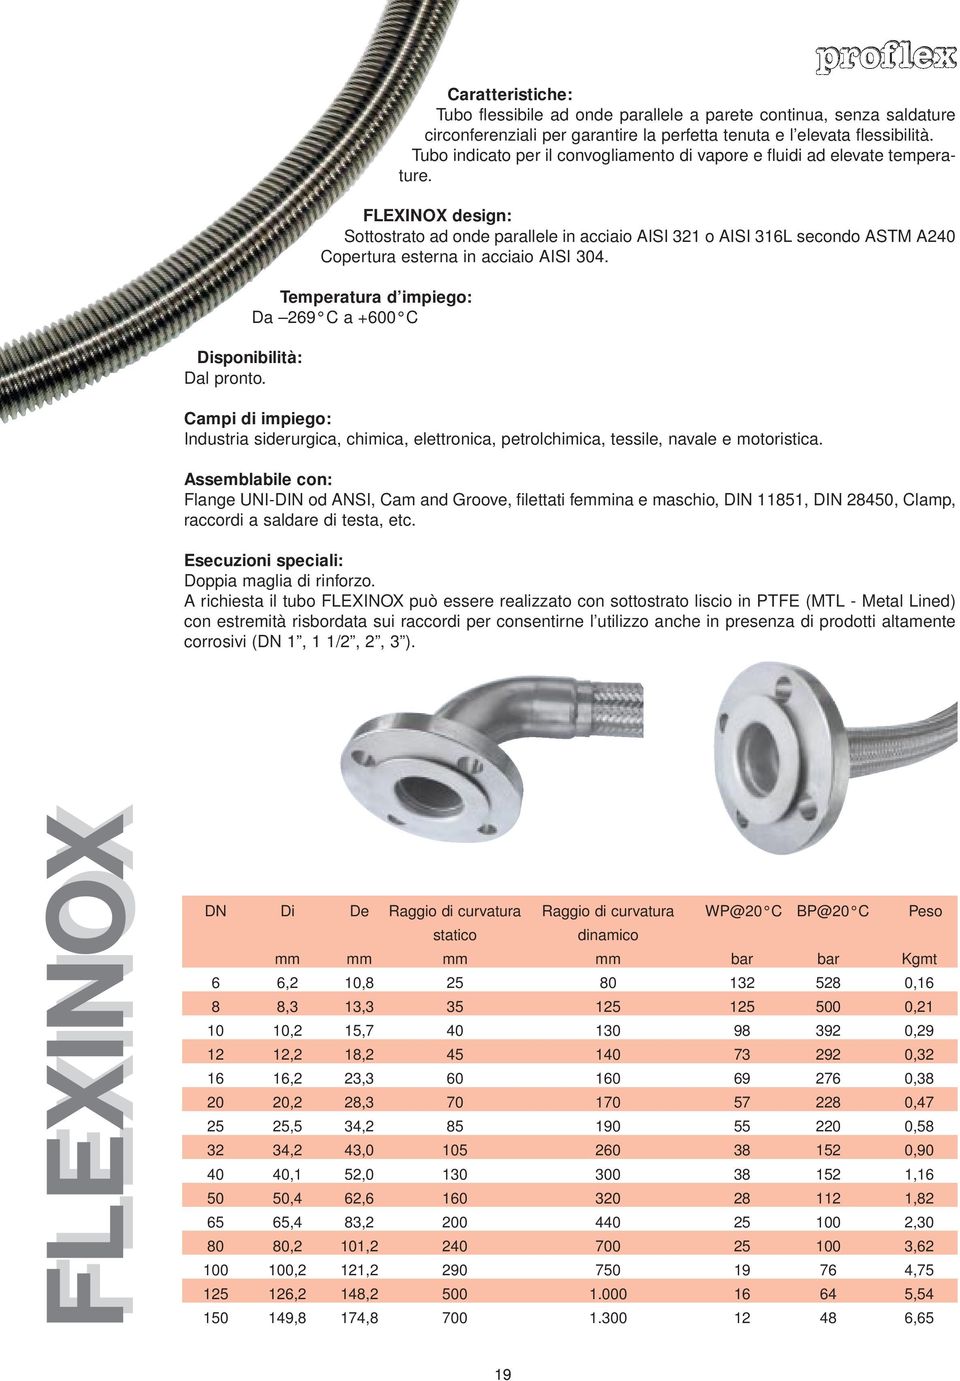 FLEXINOX design: Sottostrato ad onde parallele in acciaio AISI 321 o AISI 316L secondo ASTM A240 Copertura esterna in acciaio AISI 304.